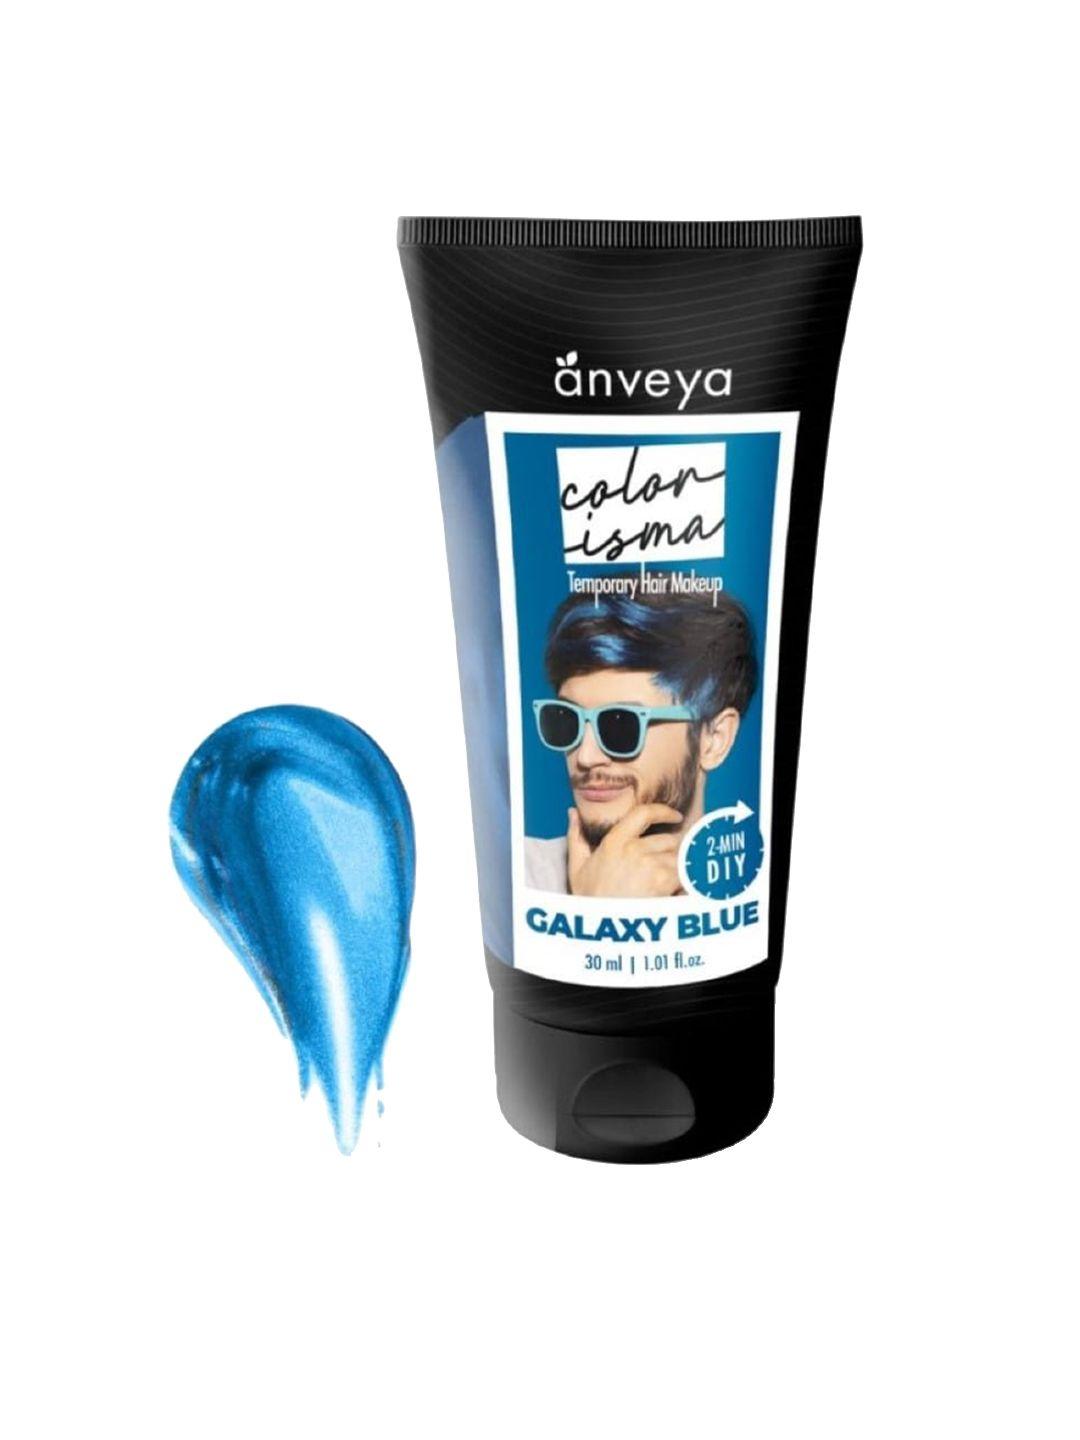 anveya colorisma temporary hair color 30 ml - galaxy blue